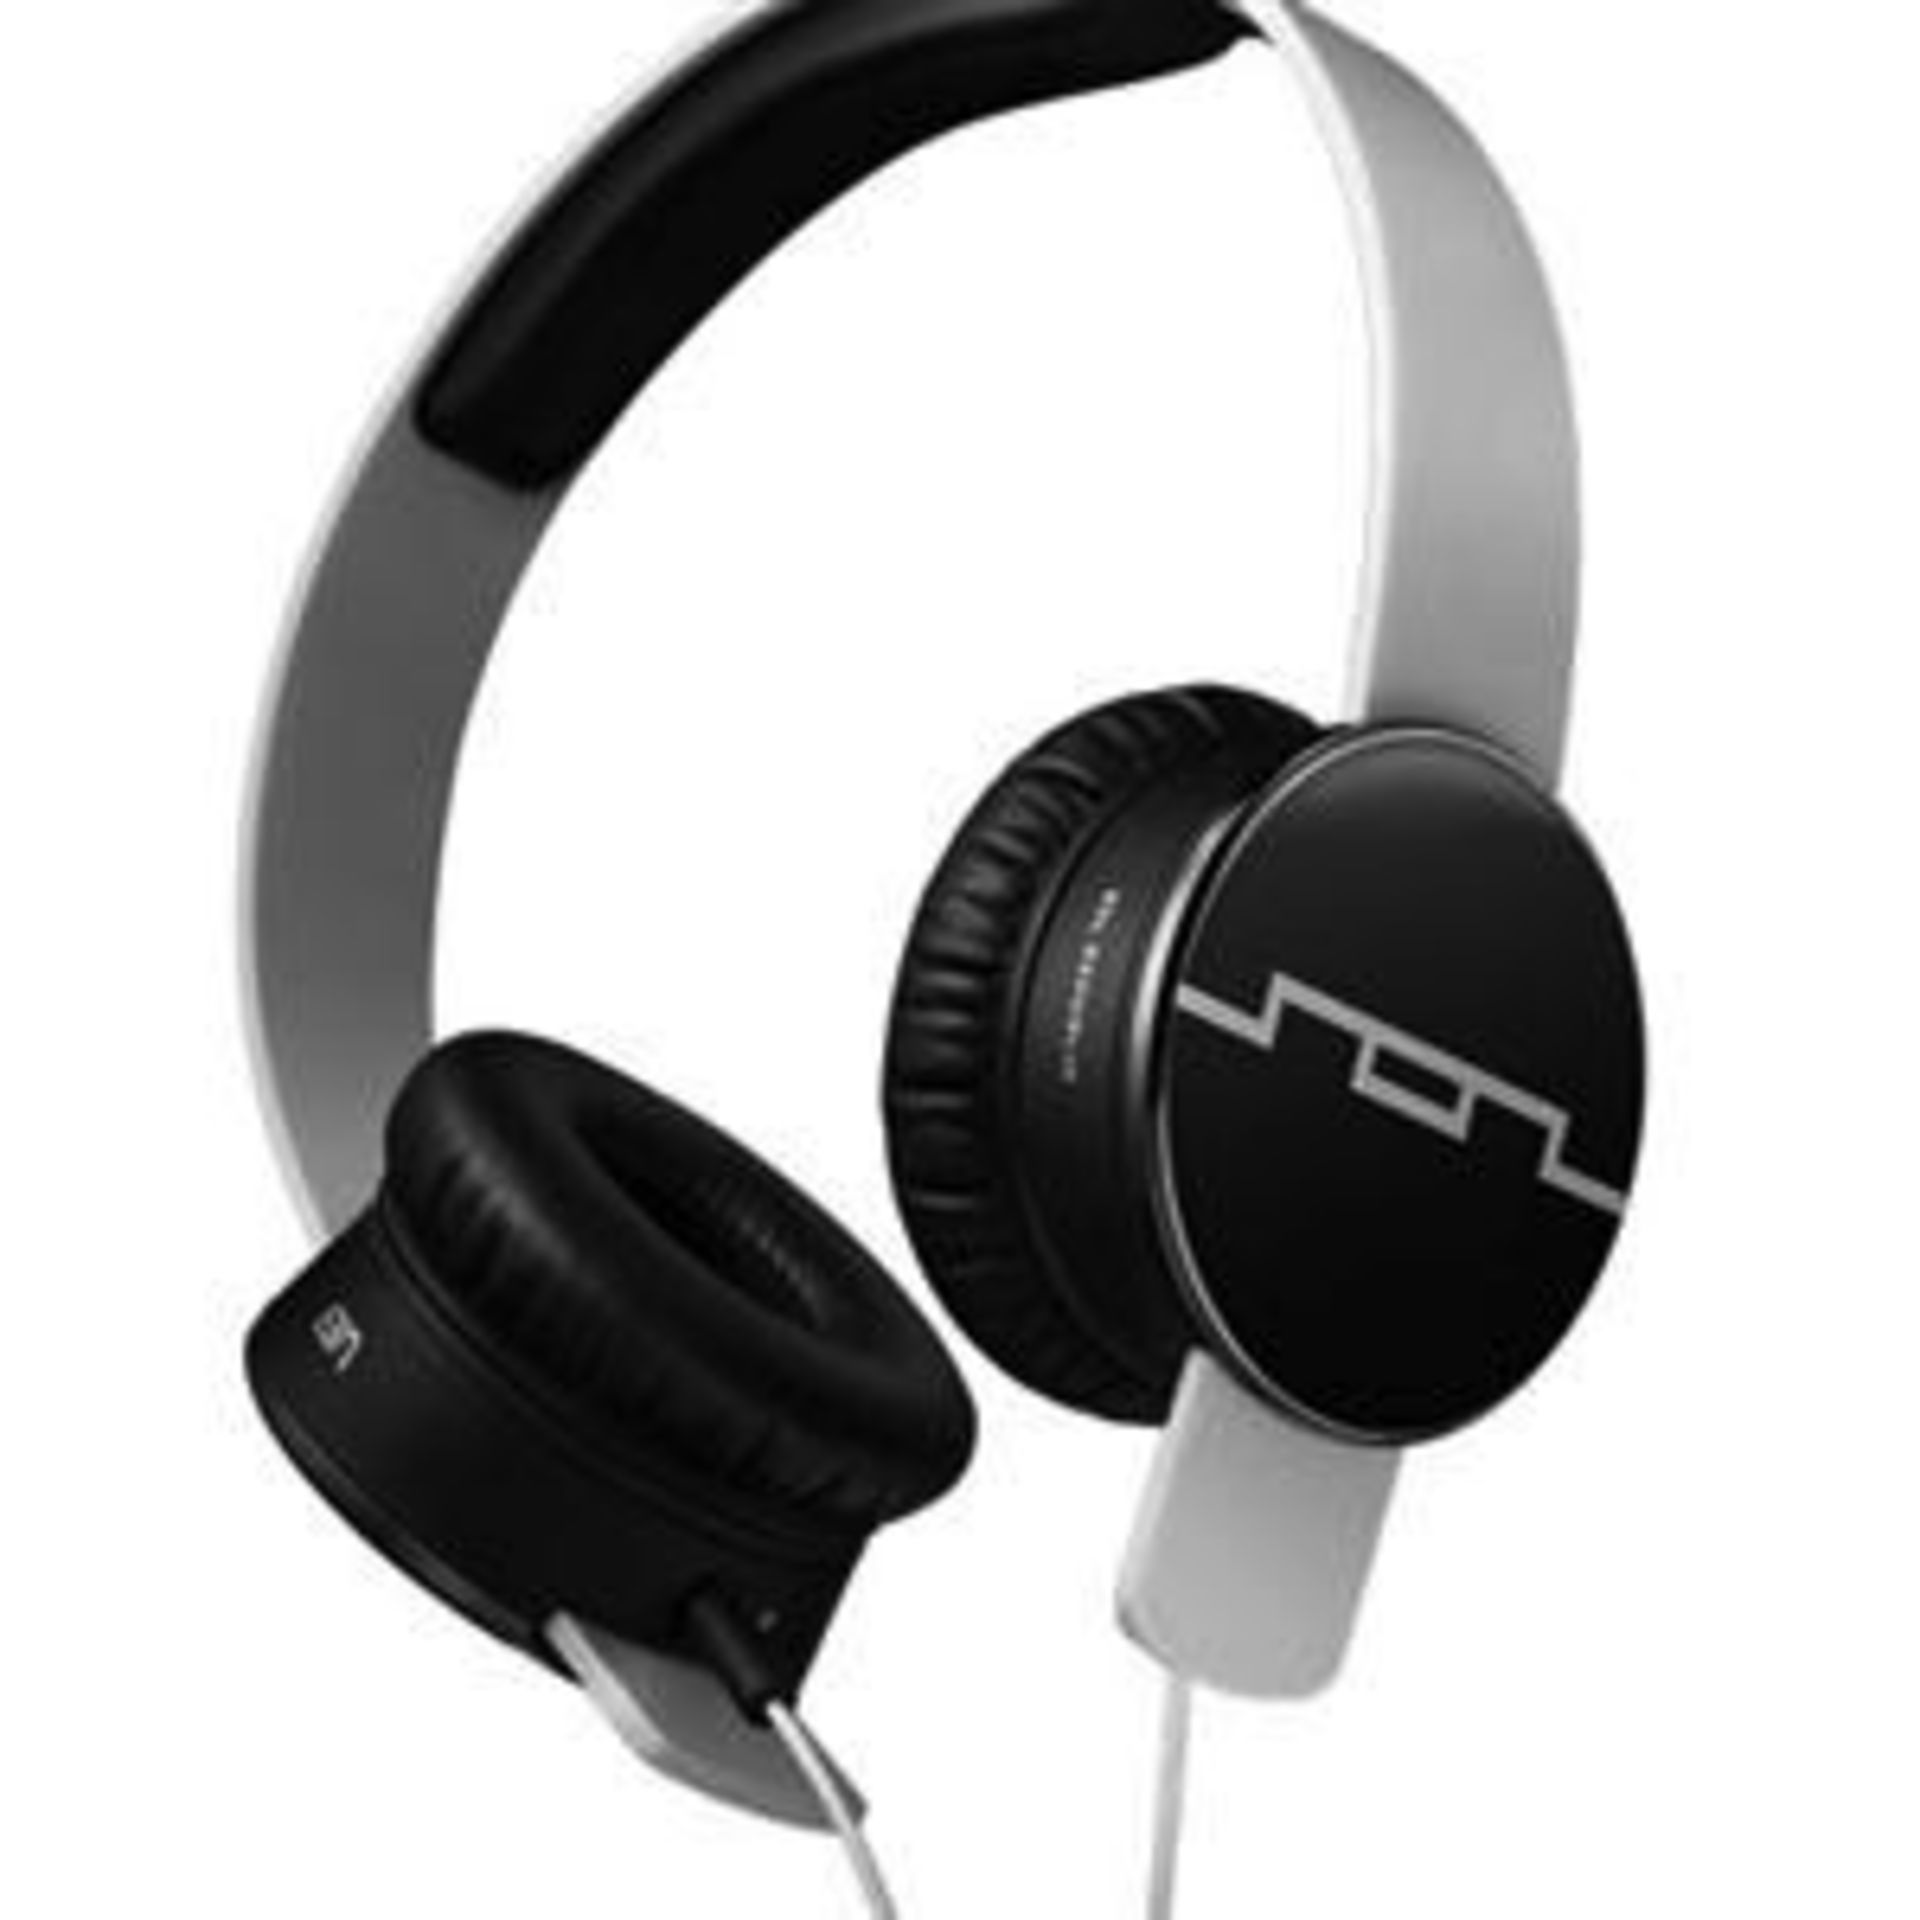 V Brand New Sol Republic Tracks V8 White - With Sonic Ear Cushions - Music & Phone Control Virtually